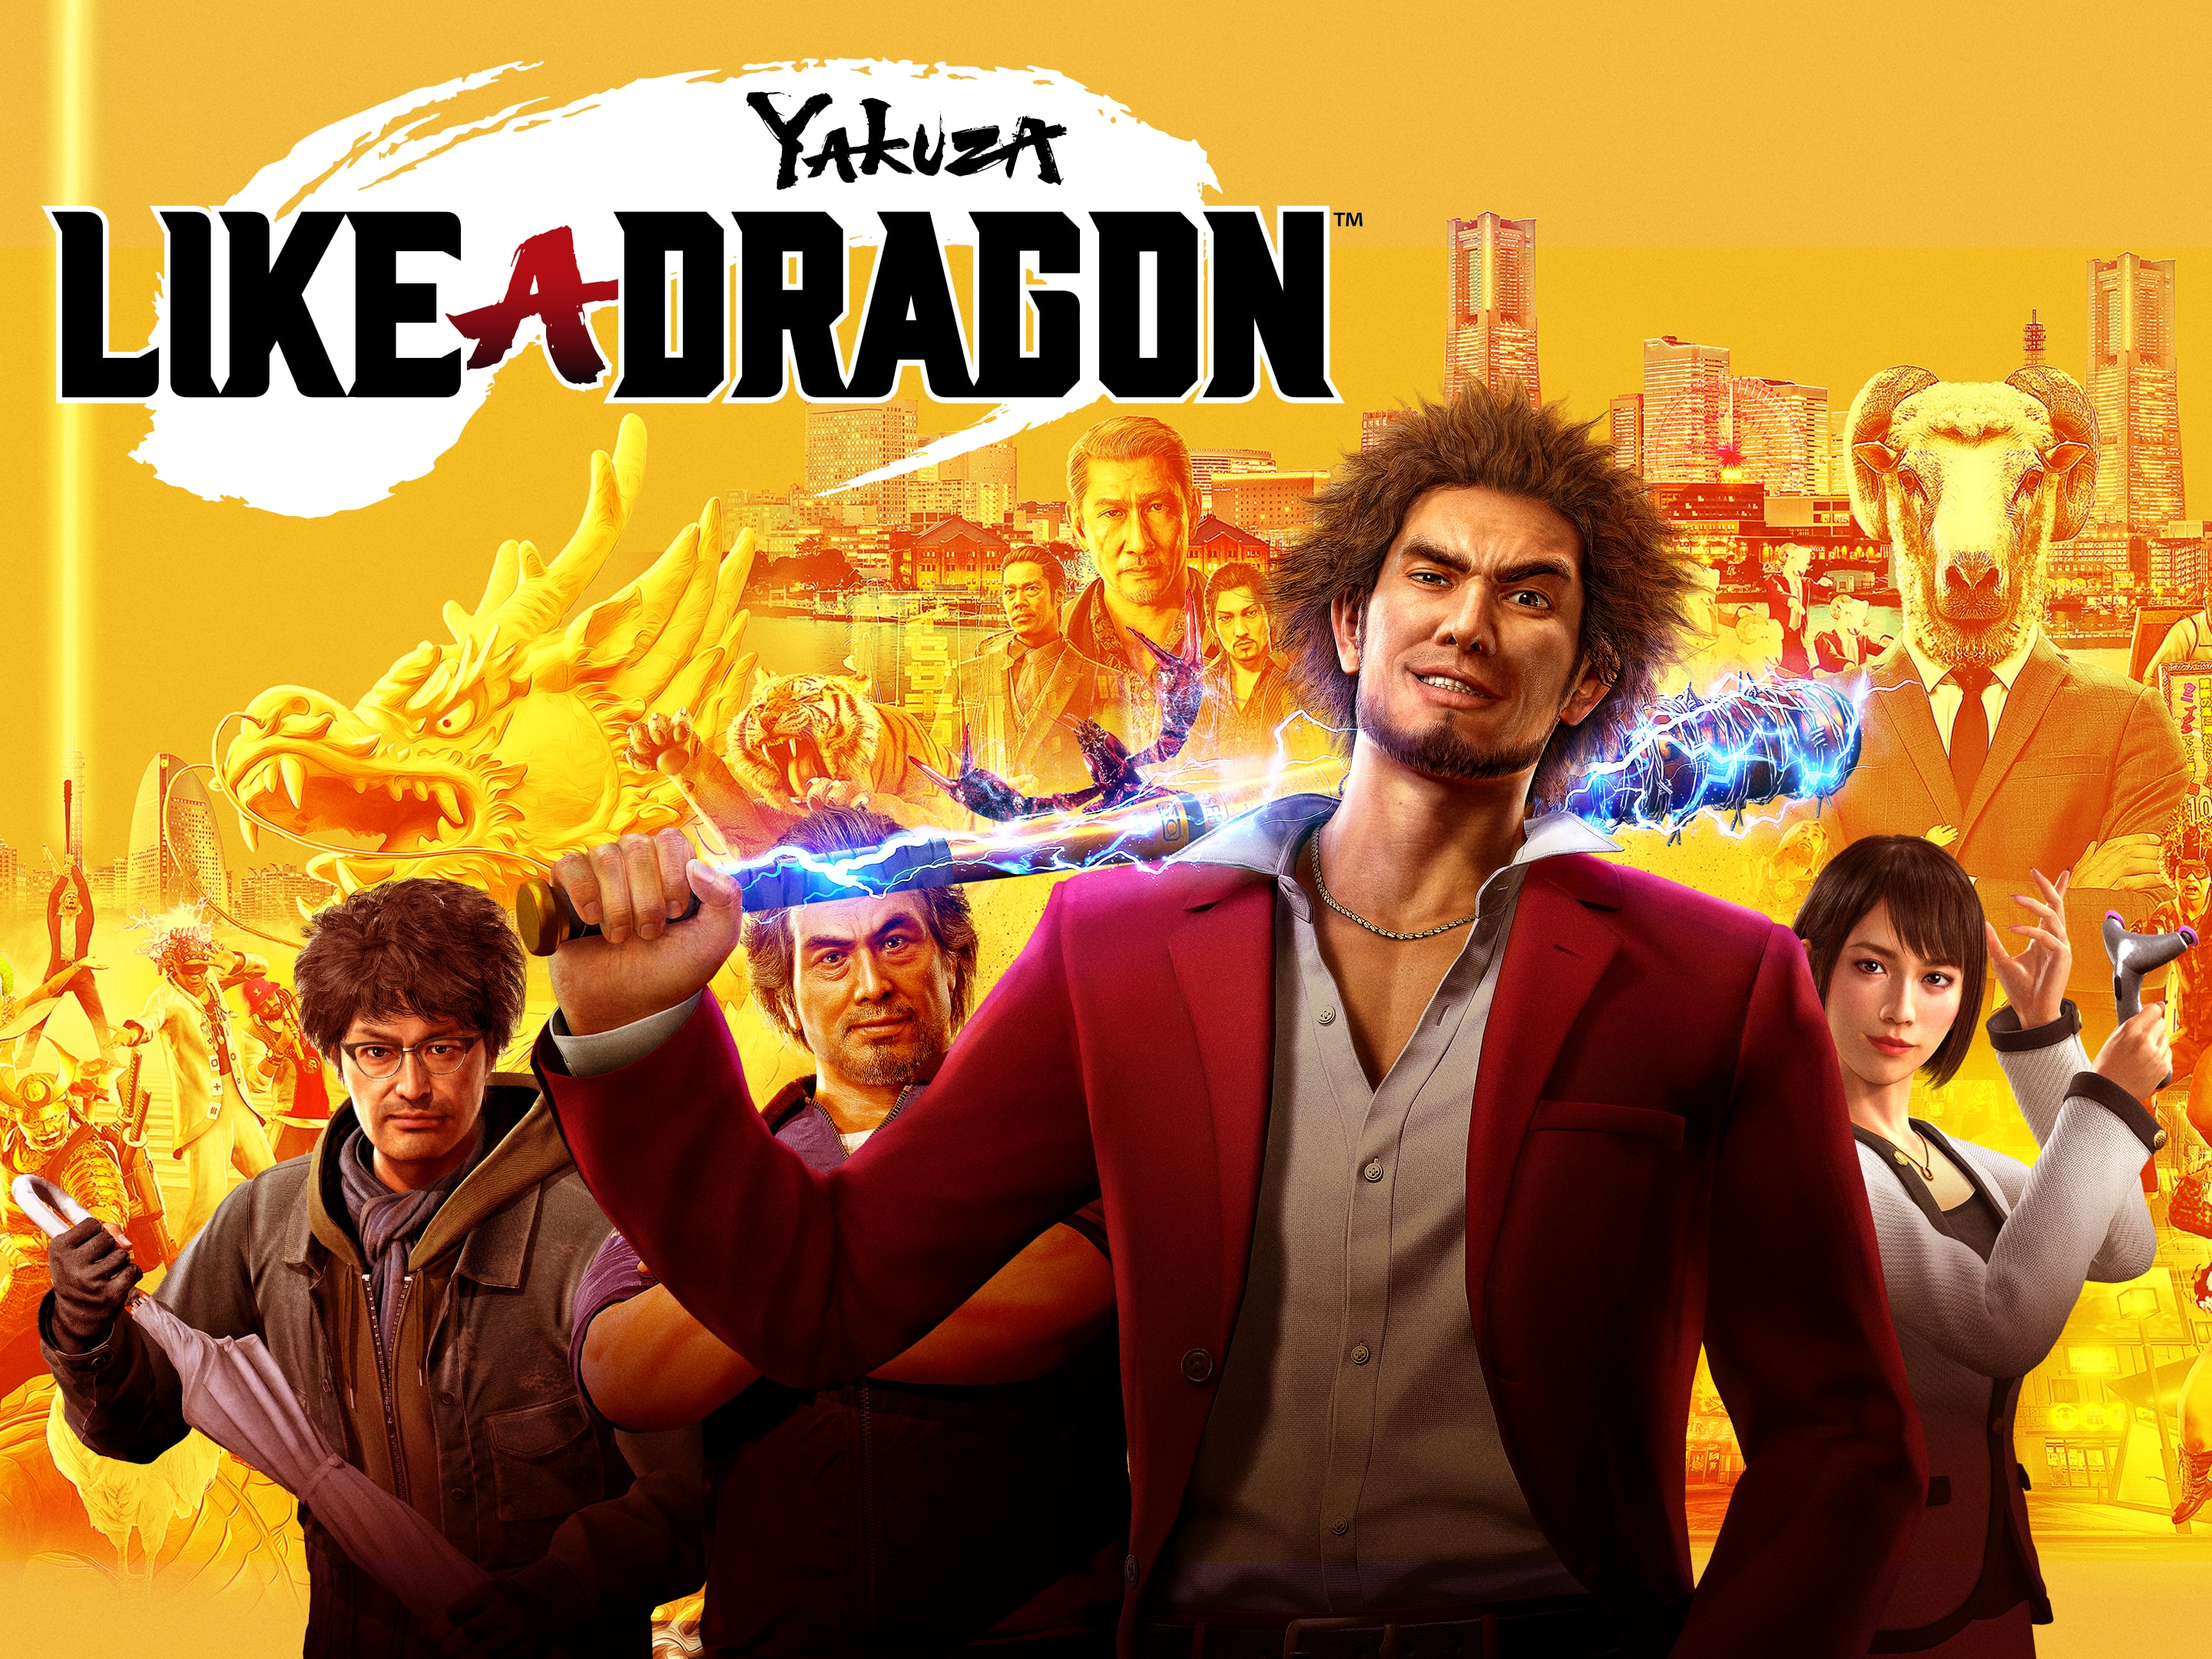 YAKUZA: LIKE A DRAGON PS4 (Juego Digital) - MyGames Now